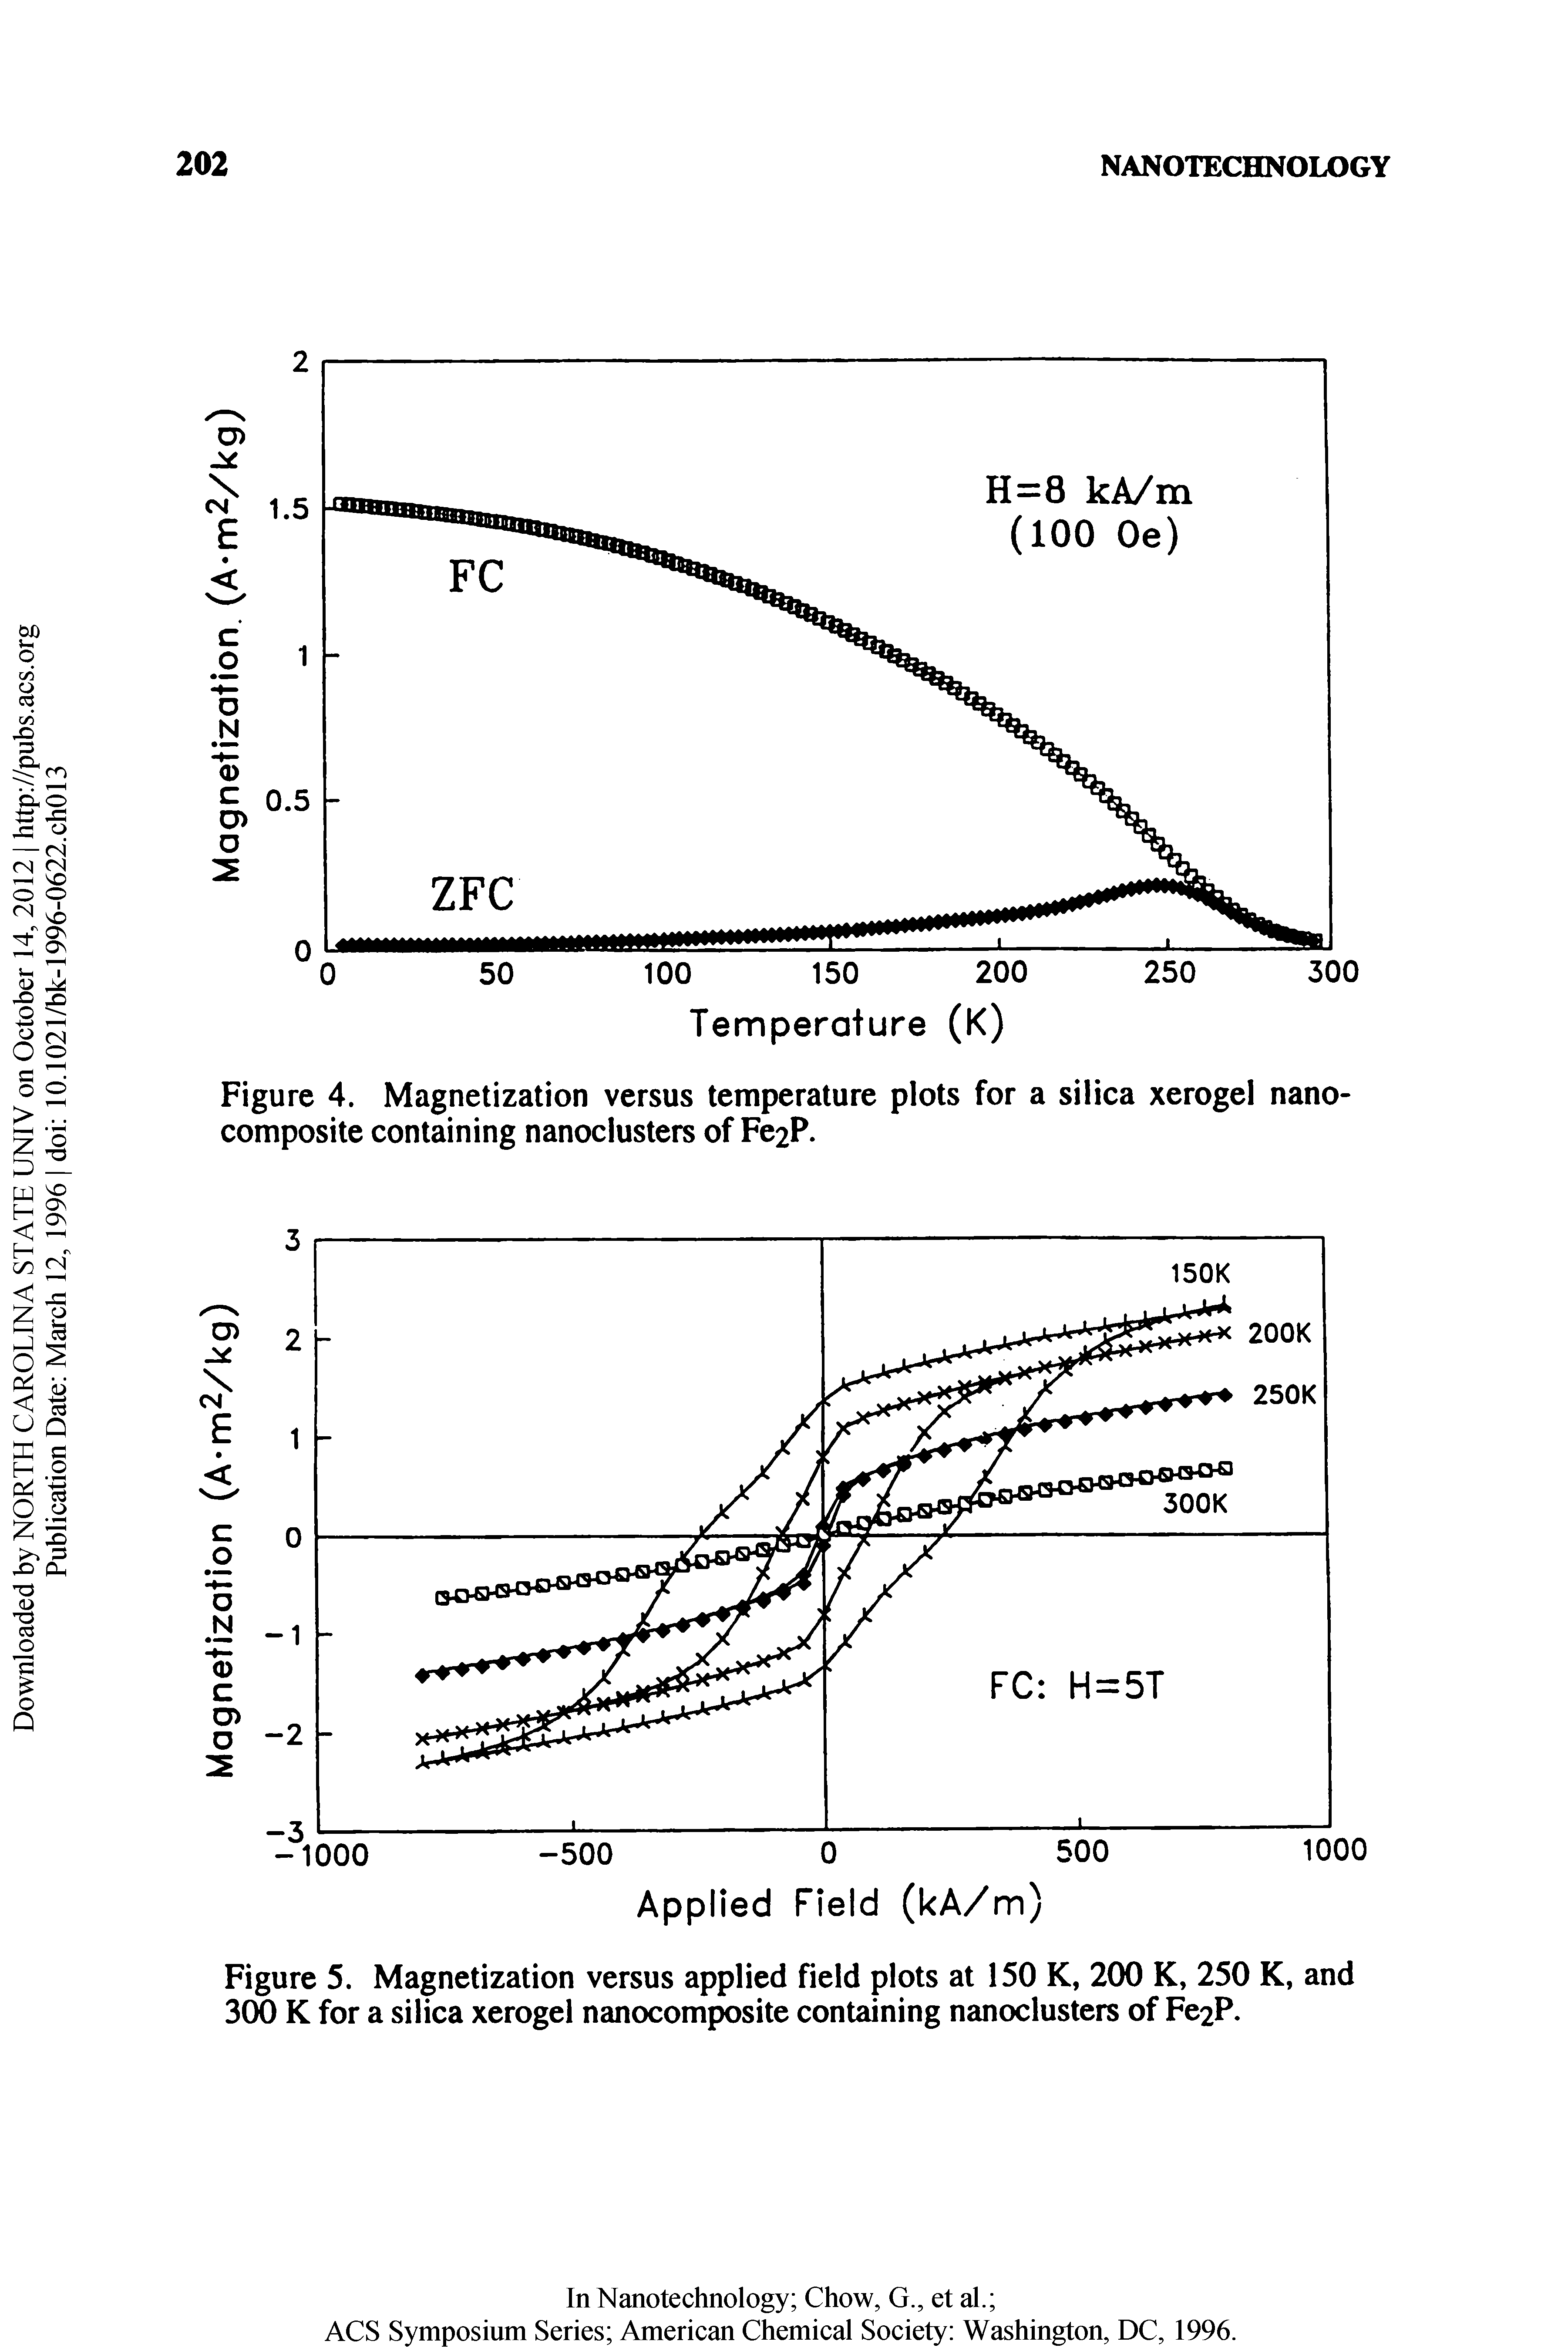 Figure 4. Magnetization versus temperature plots for a silica xerogel nanocomposite containing nanoclusters of Fe2P.